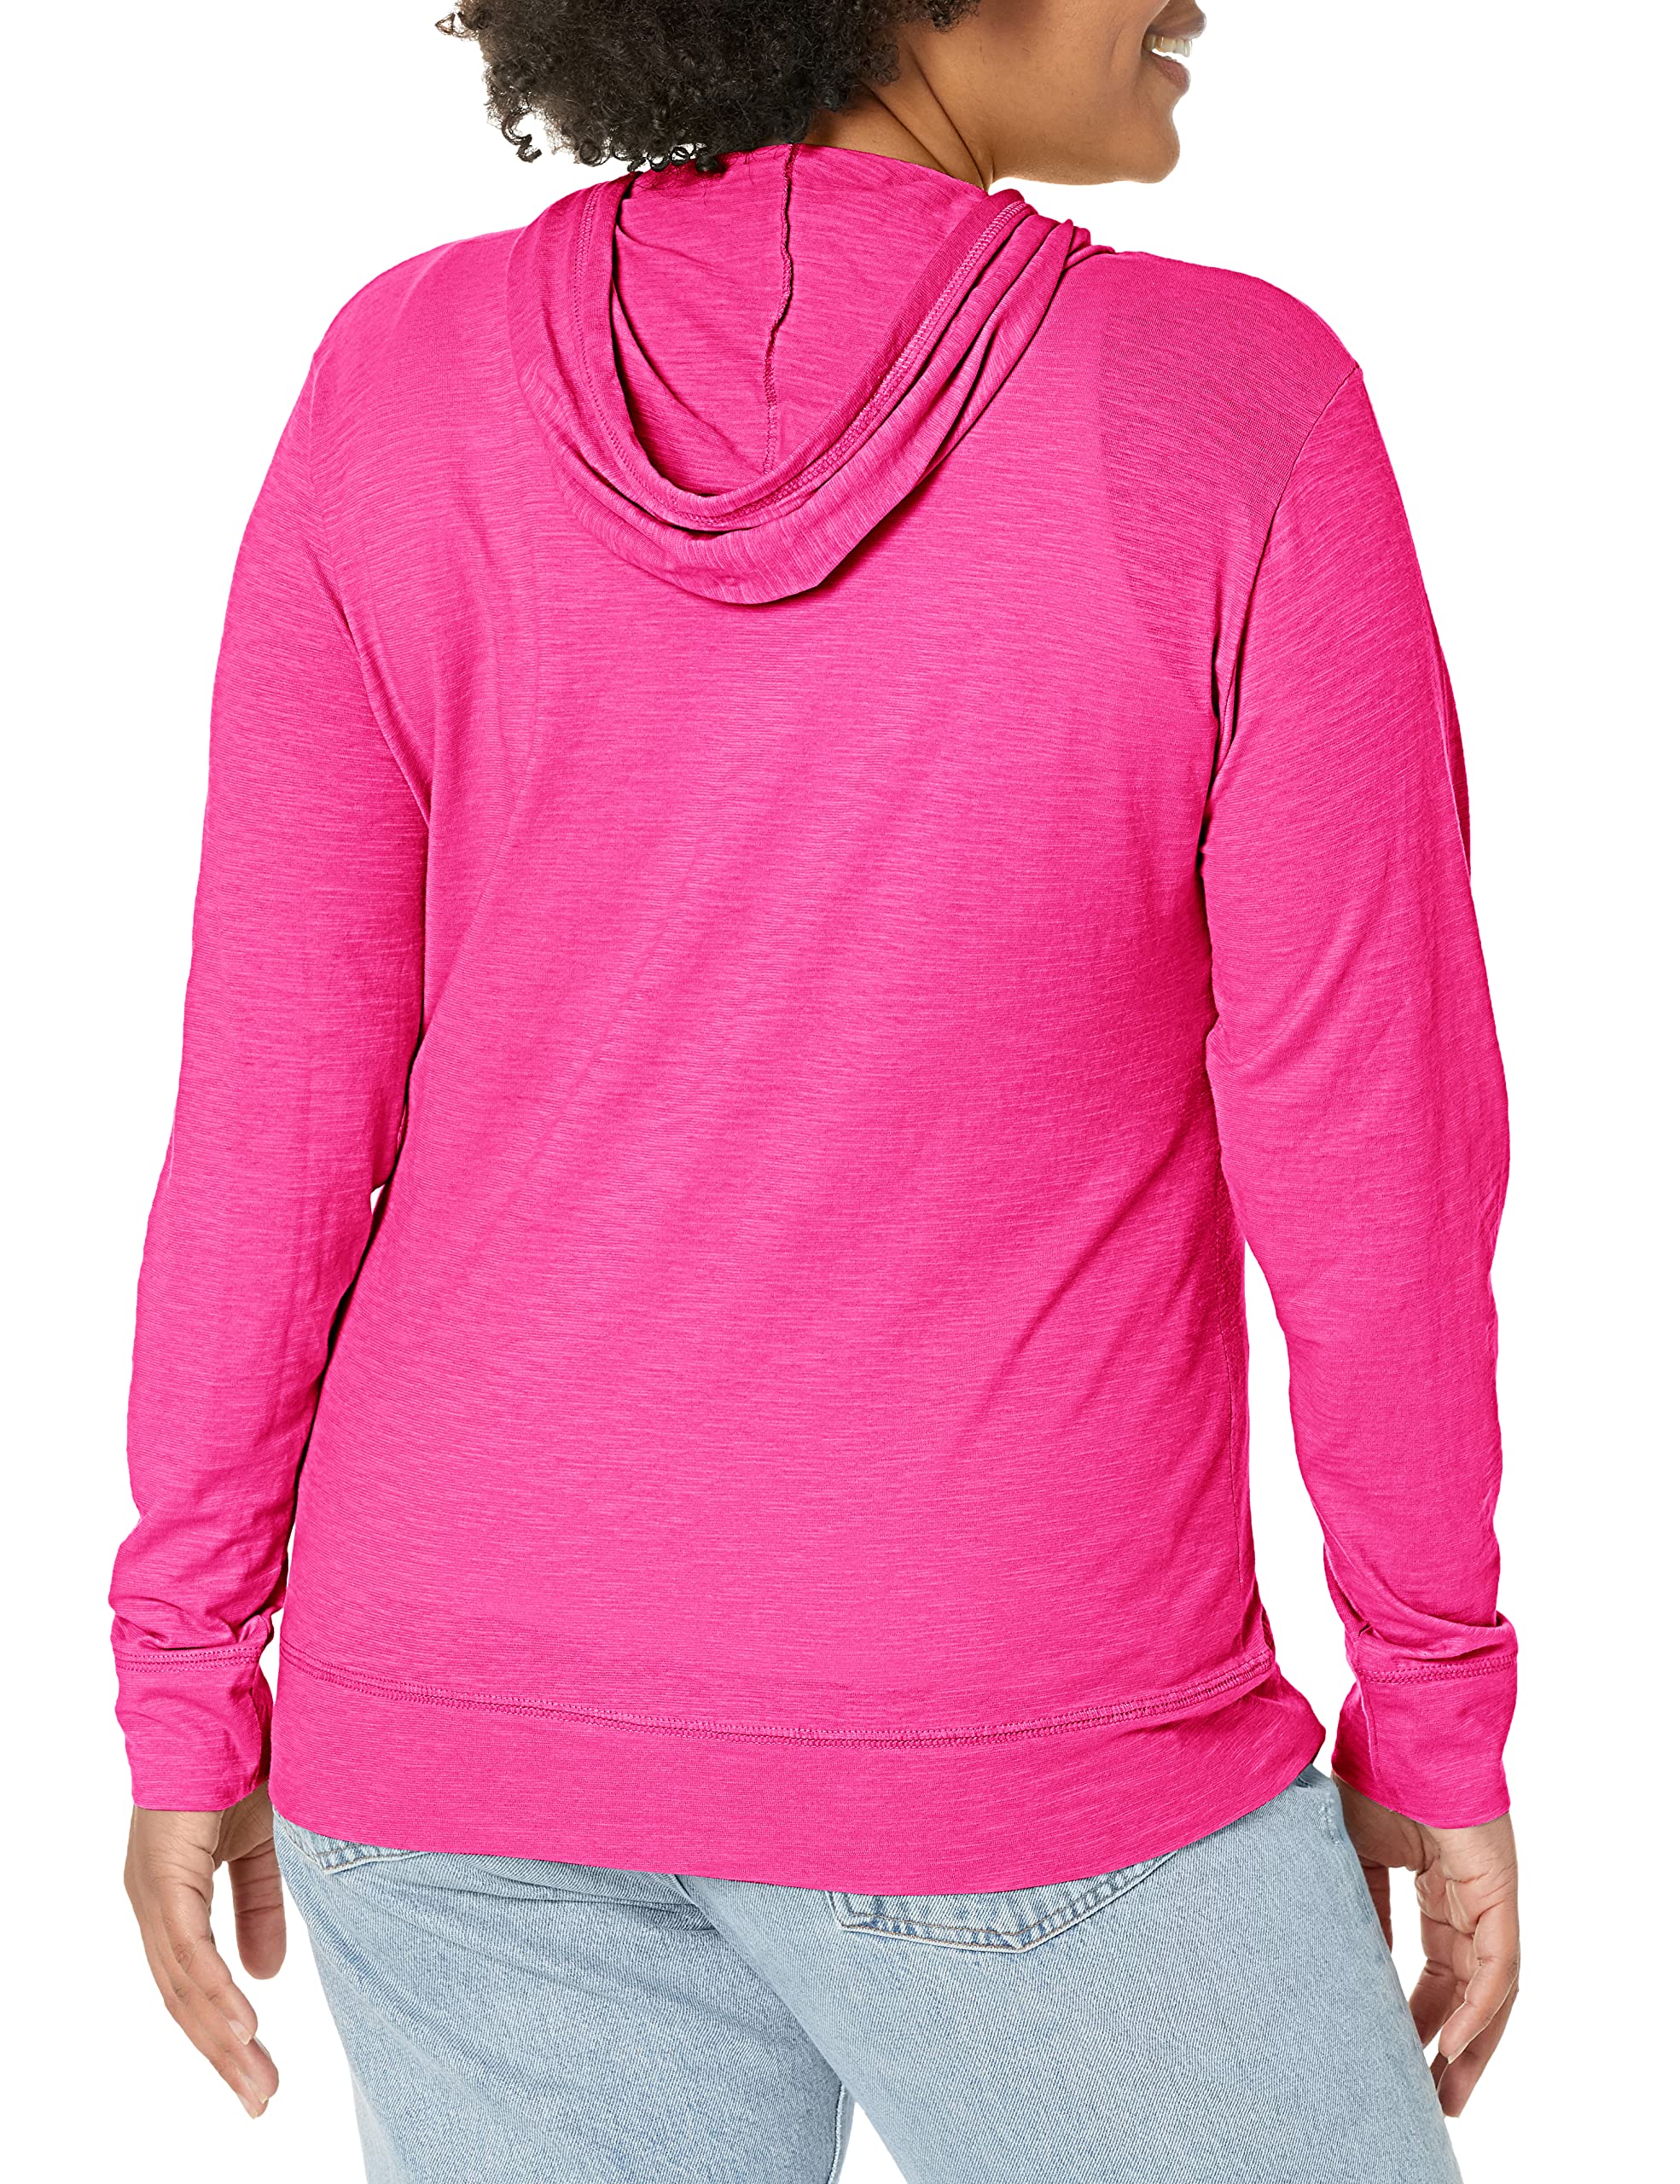 Hanes Women’s Slub Knit Full-Zip Hoodie, Textured Cotton Zip-Up T-Shirt Hoodie for Women